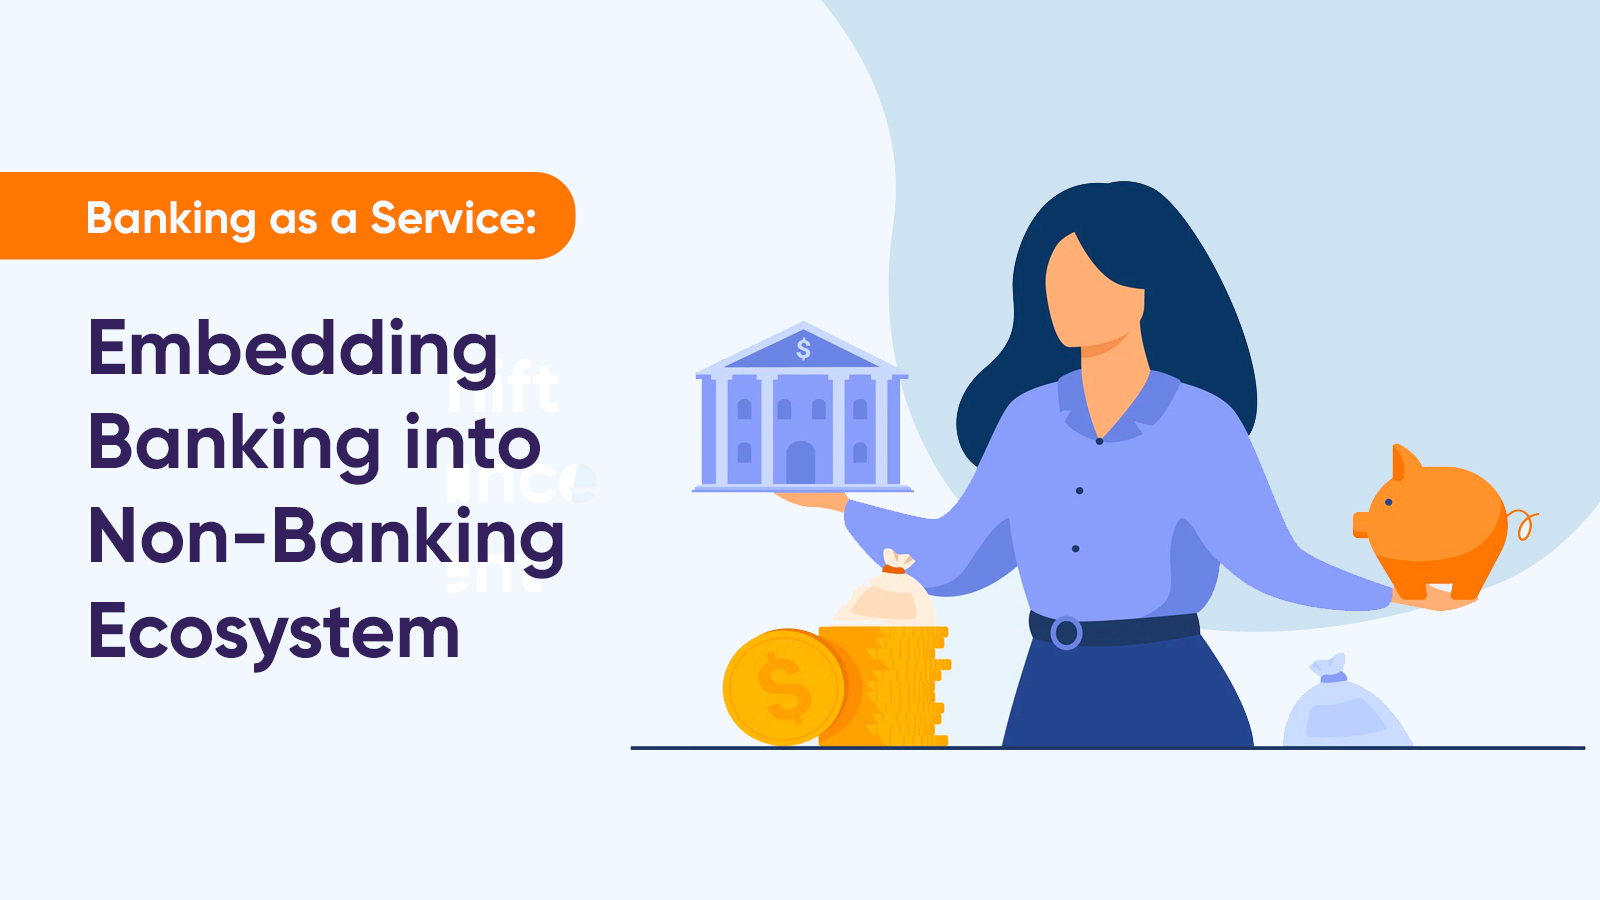 Banking as a Service: Embedding Banking into Non-Banking Ecosystem